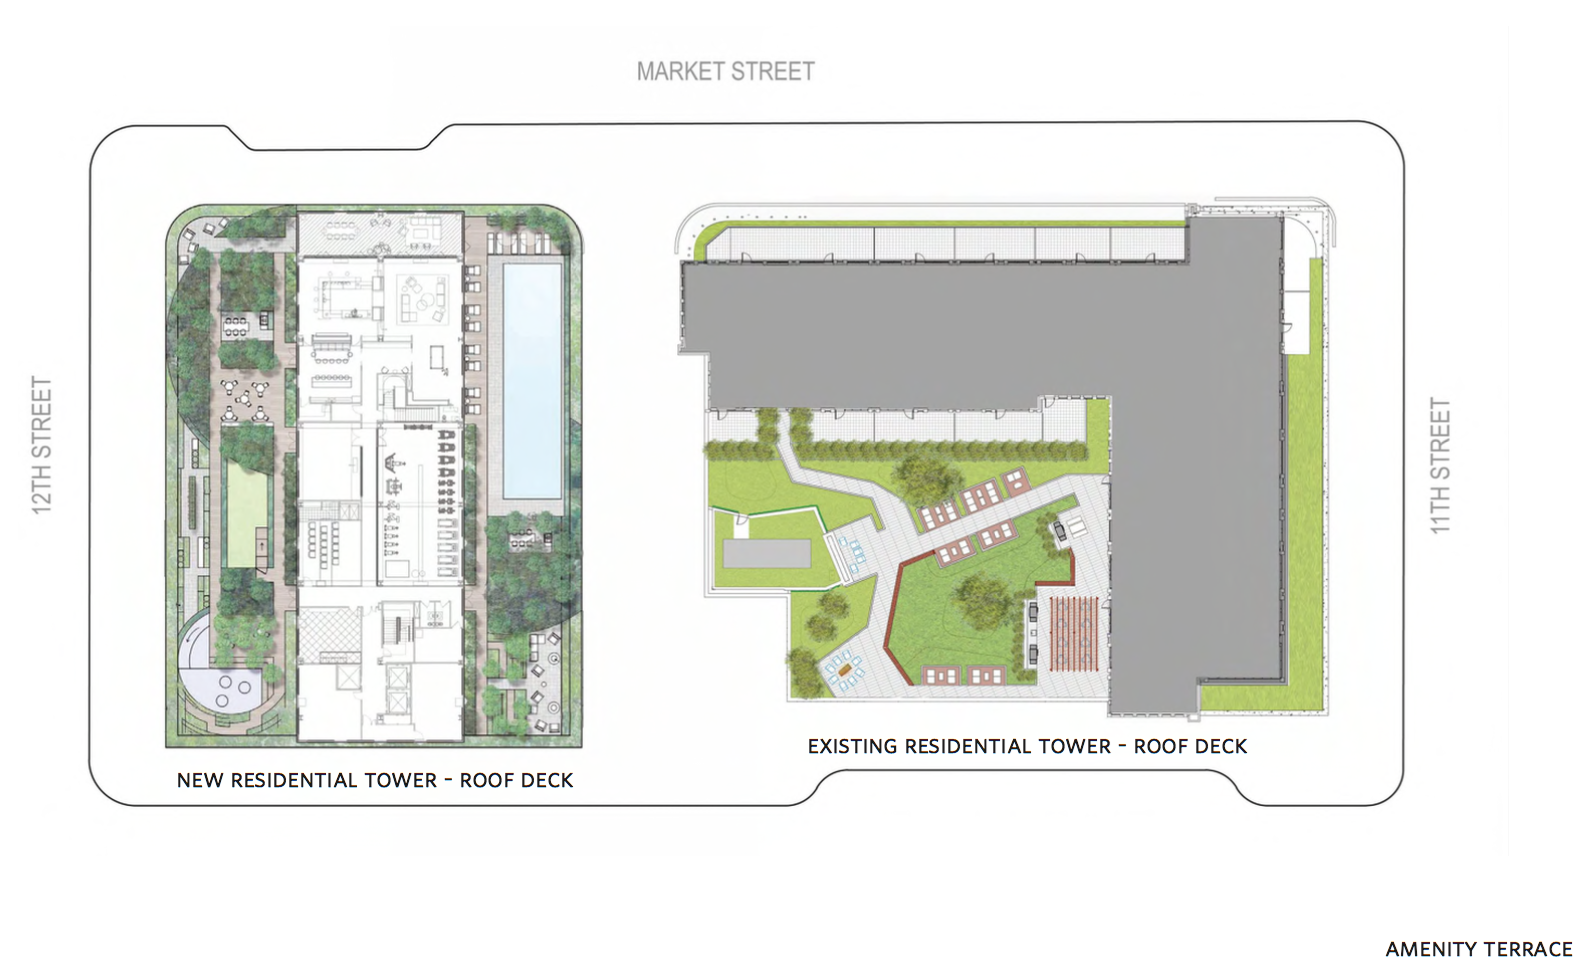 Amenity Terrace plan | BLTa, East Market CDR presentation, Sept. 2016